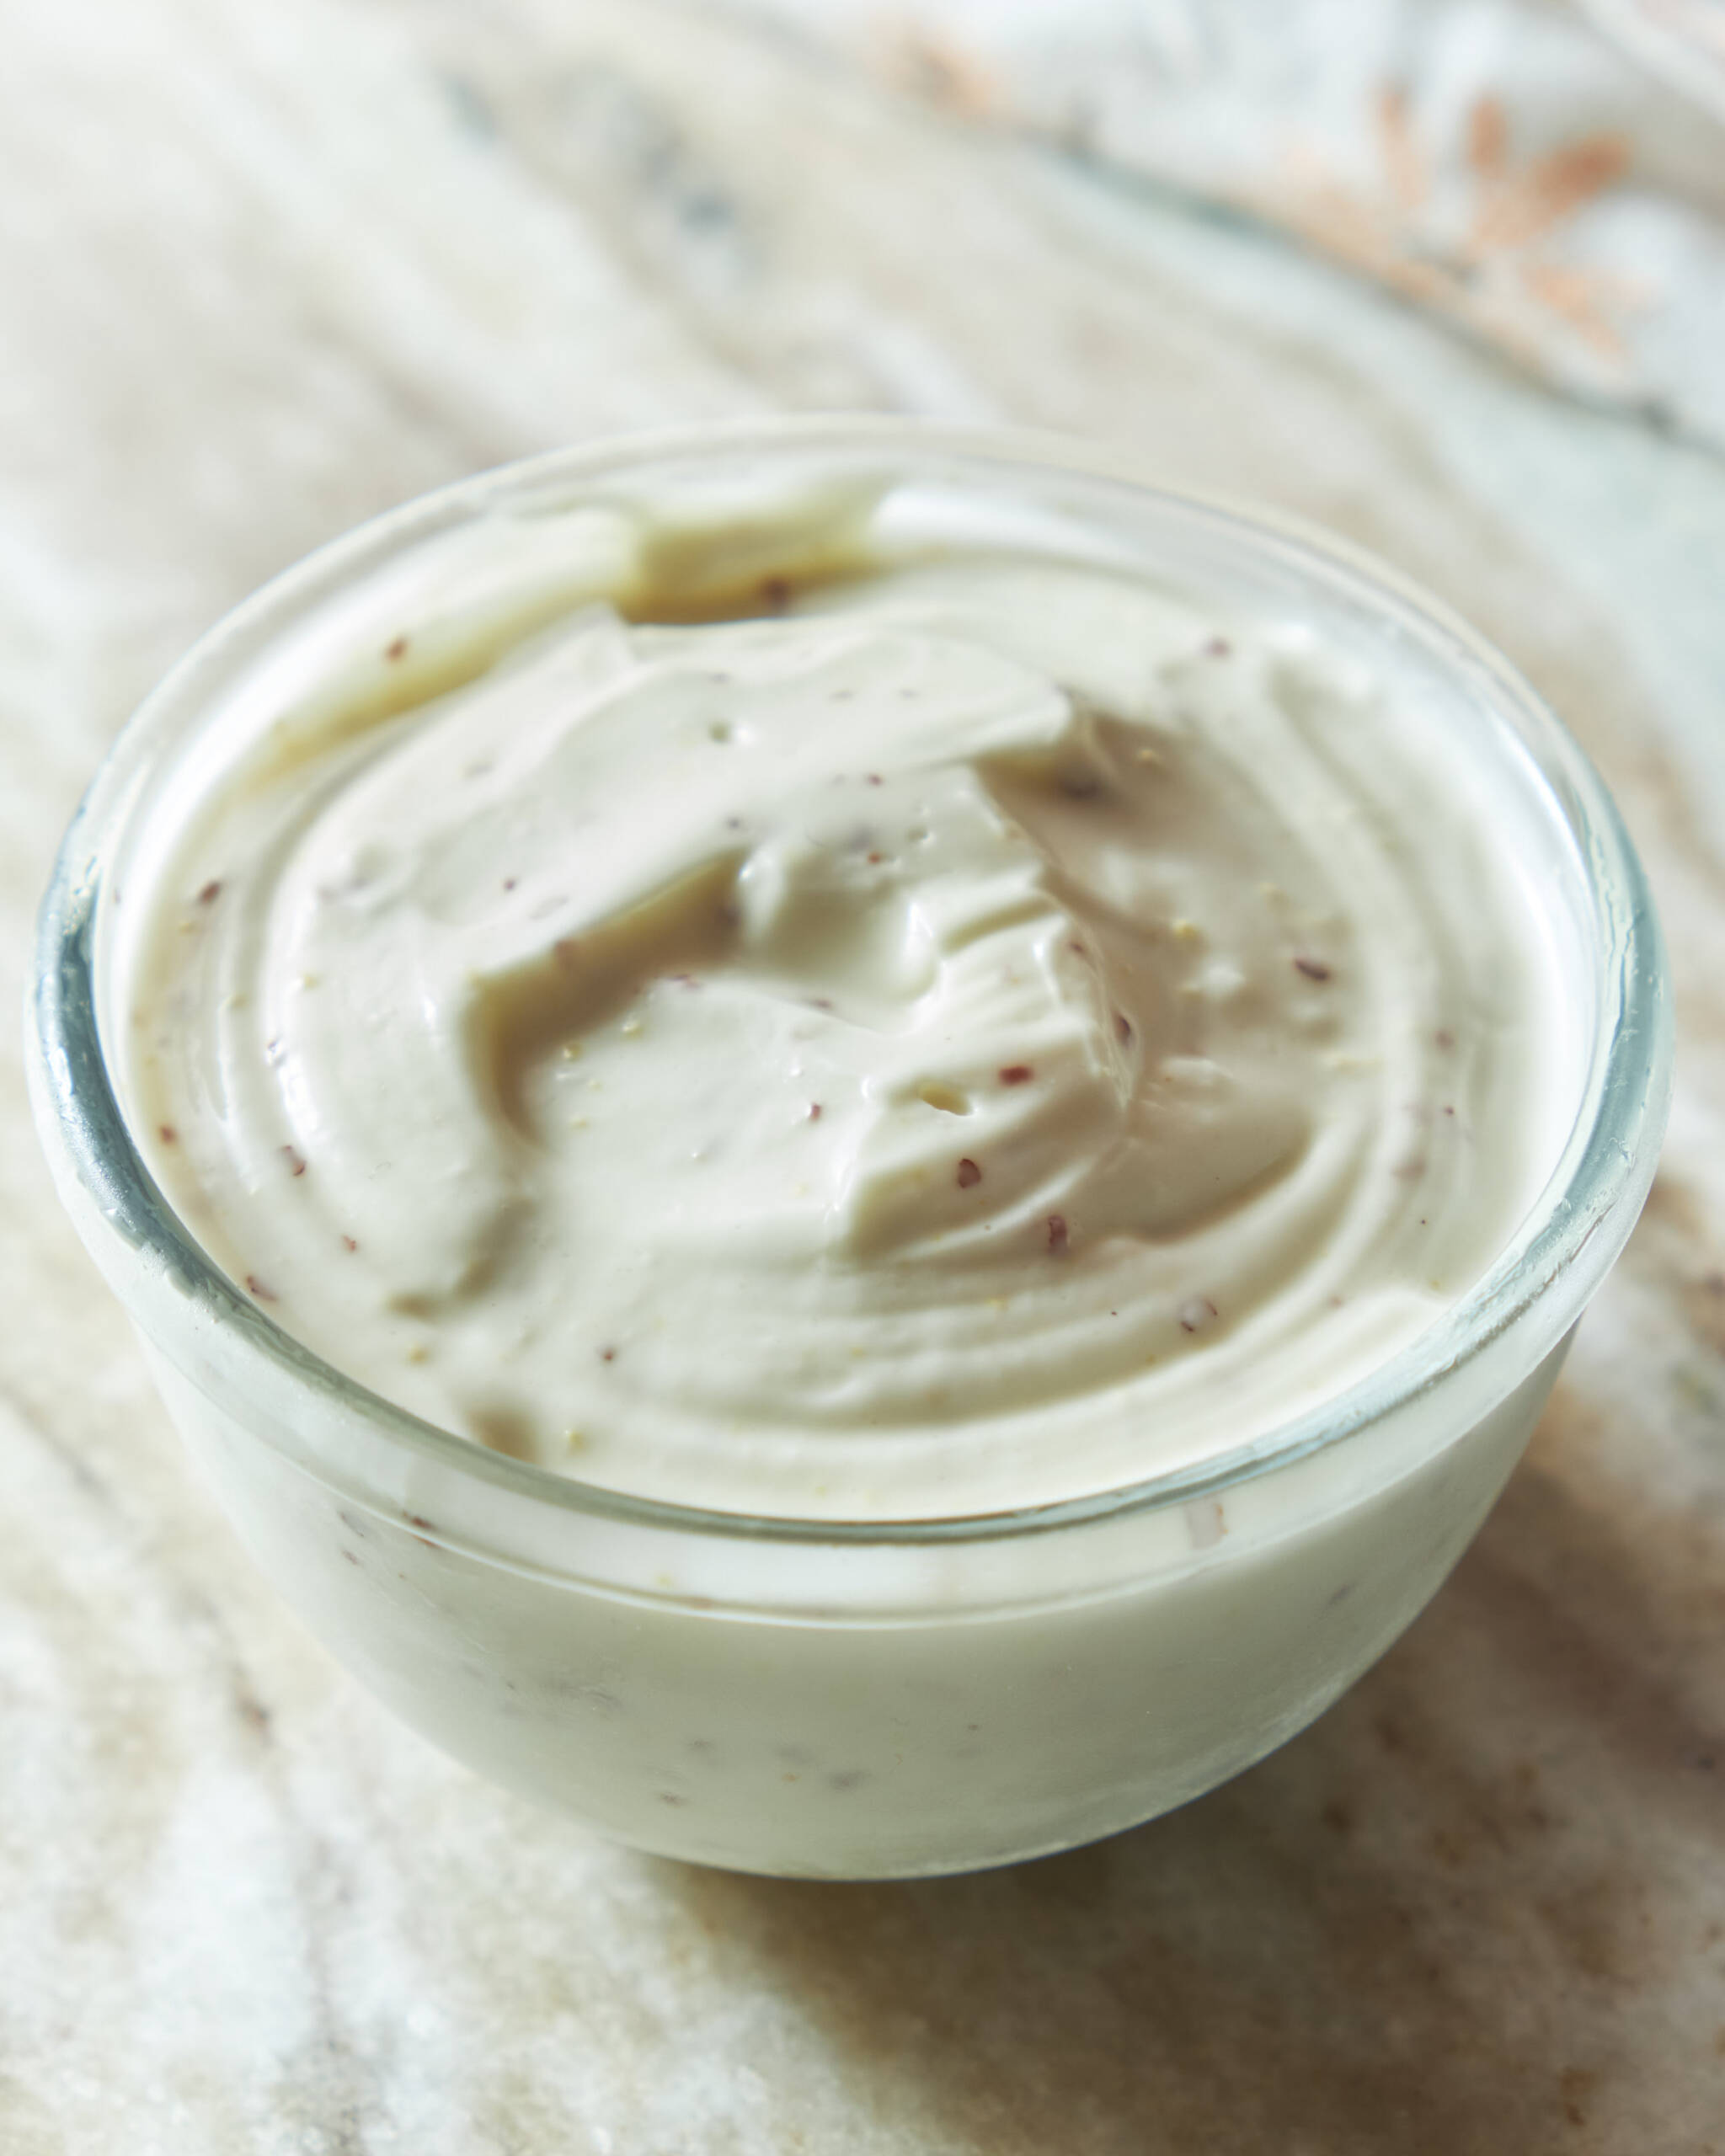 How to make homemade vegan mayonnaise